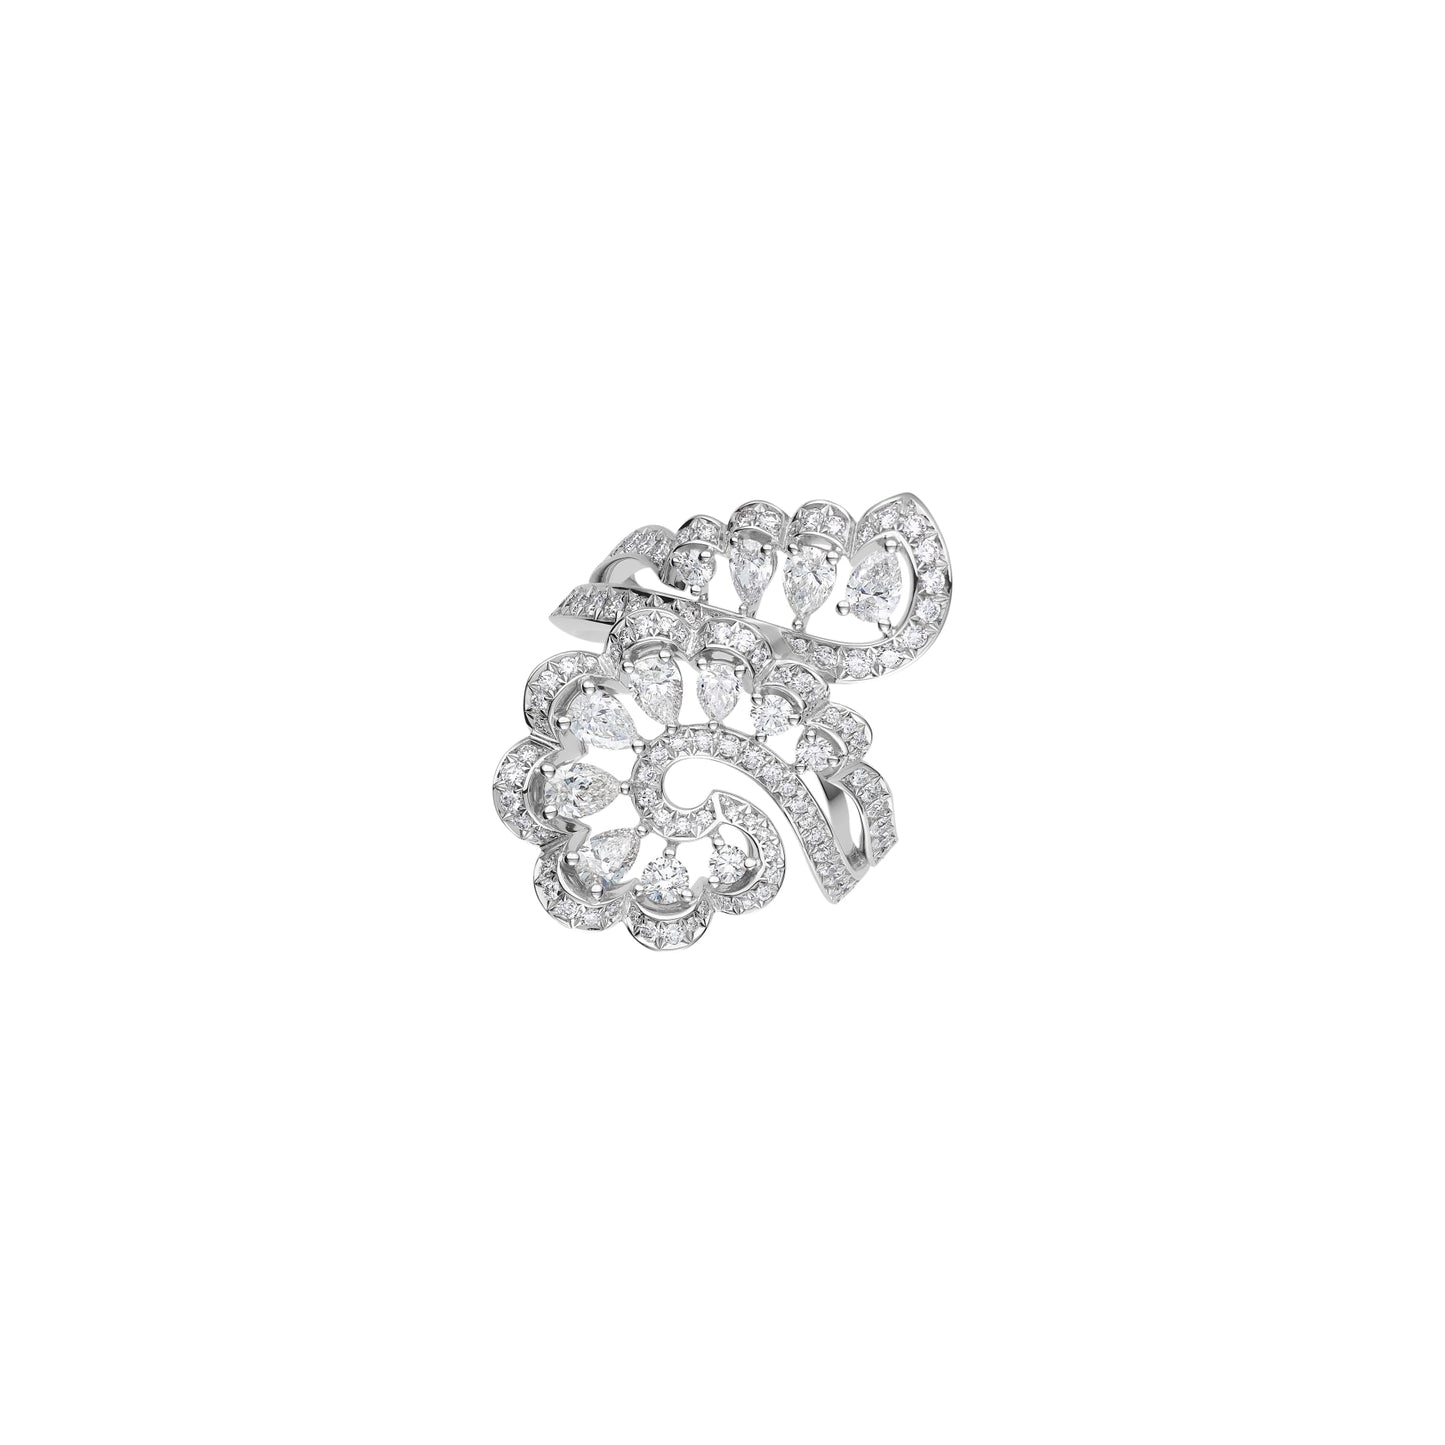 PRECIOUS LACE VAGUE RING, ETHICAL WHITE GOLD, DIAMONDS 828349-1010